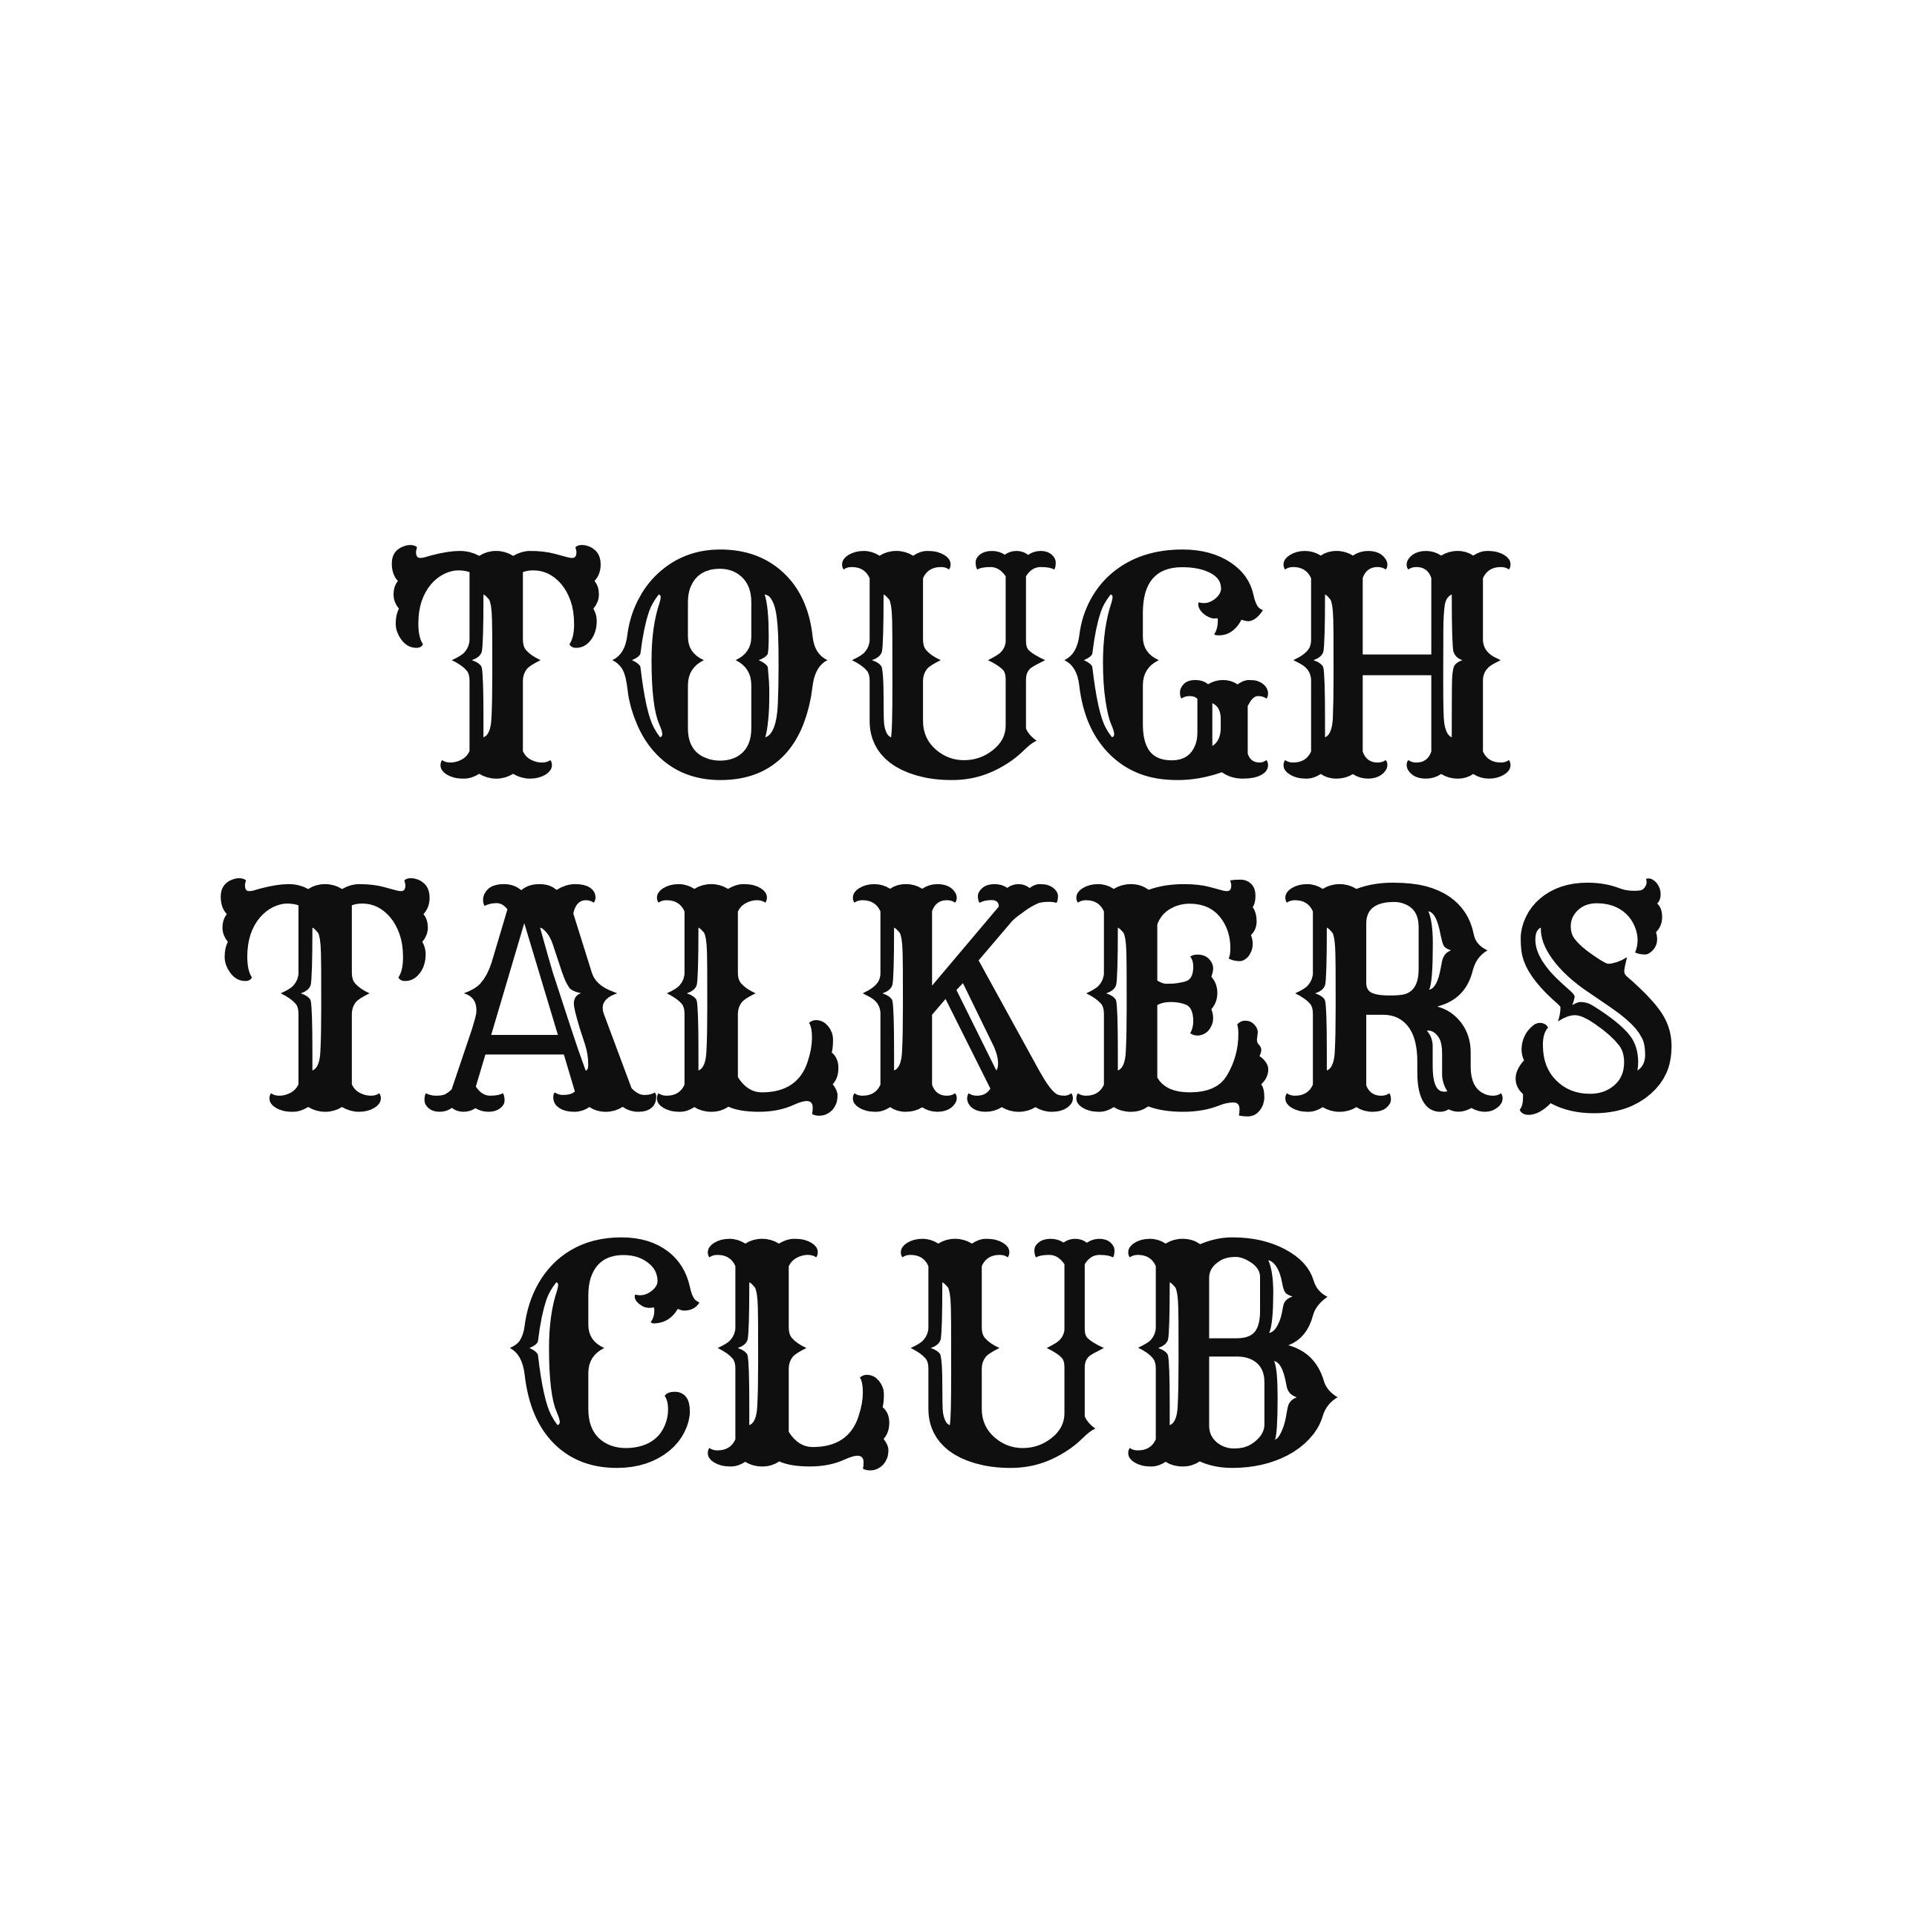 Tough Talkers Club